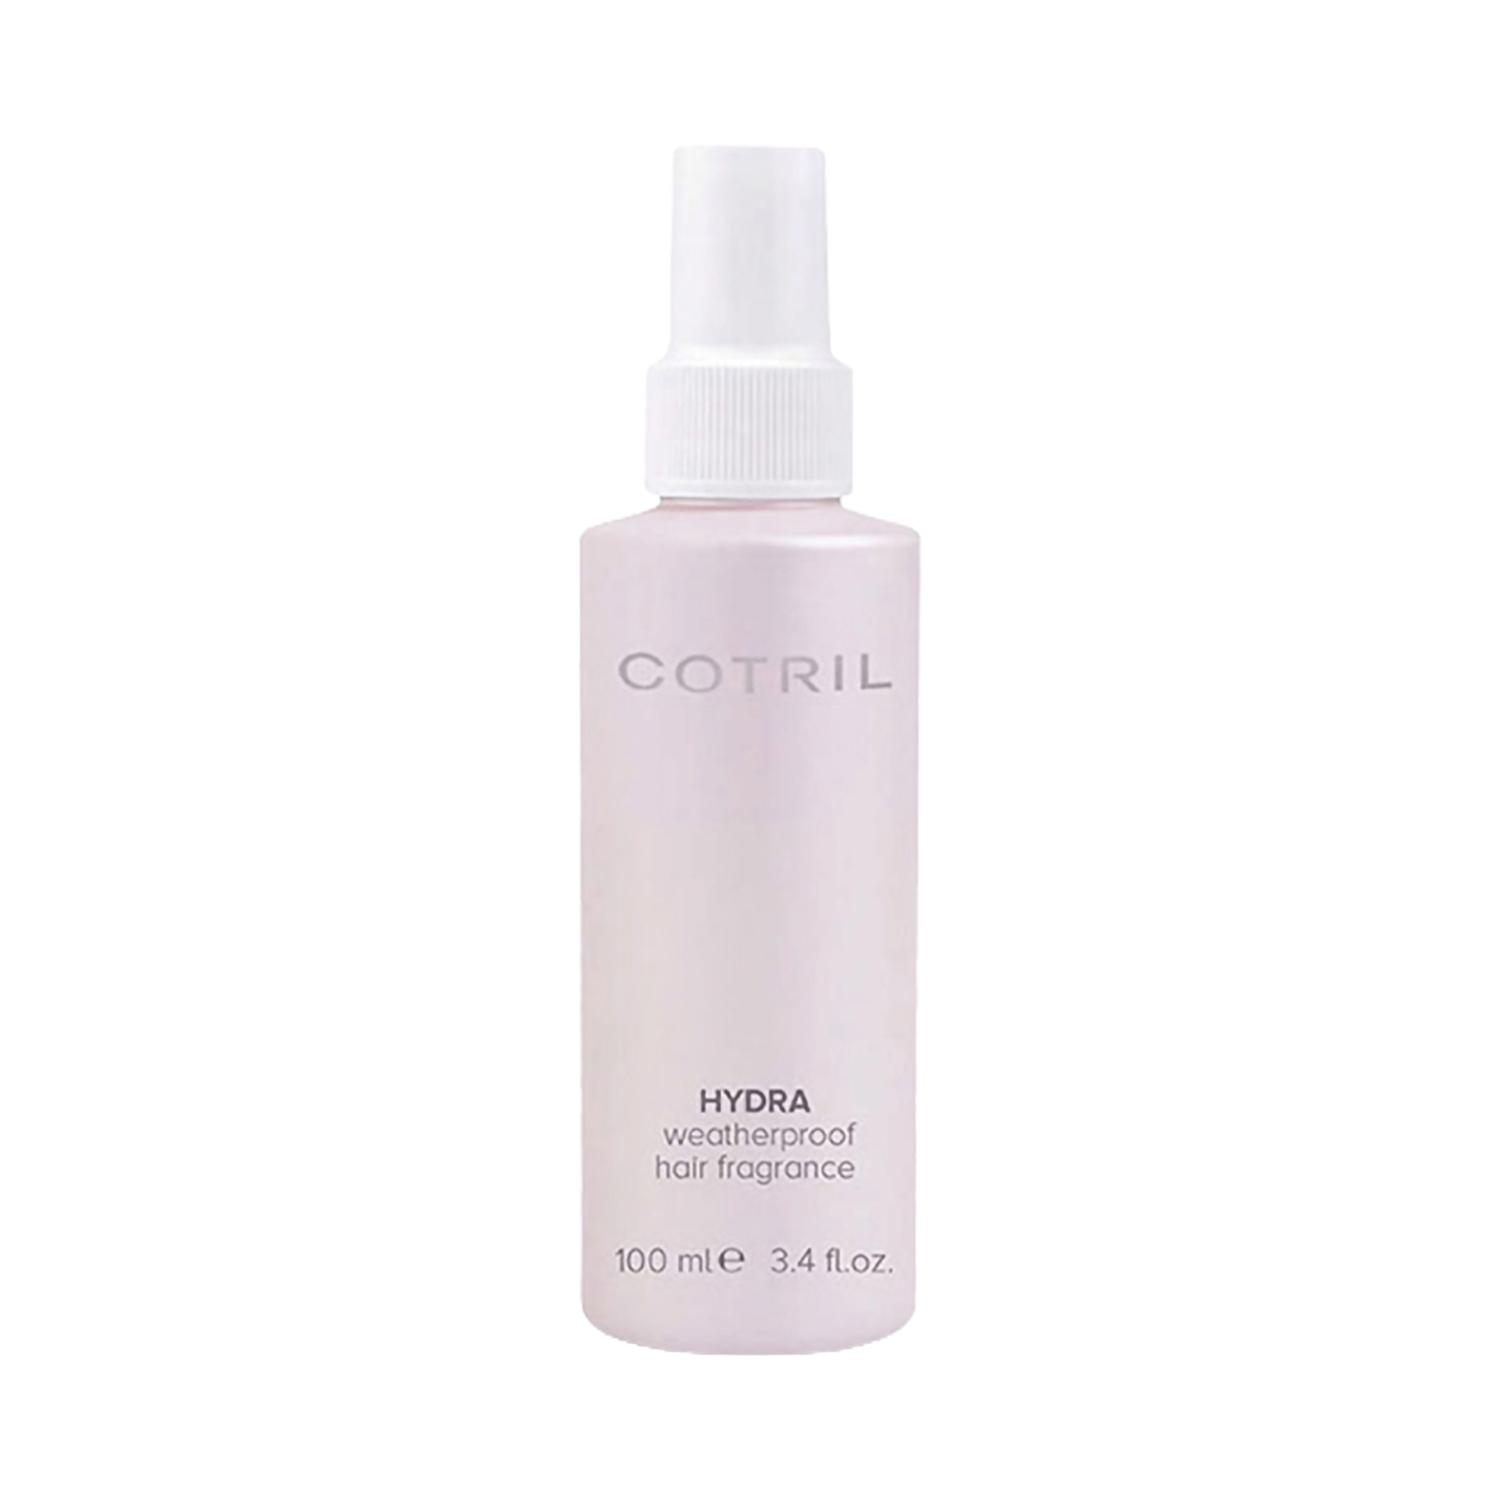 COTRIL Hydra Weatherproof Hair Fragrance Spray (100 ml)